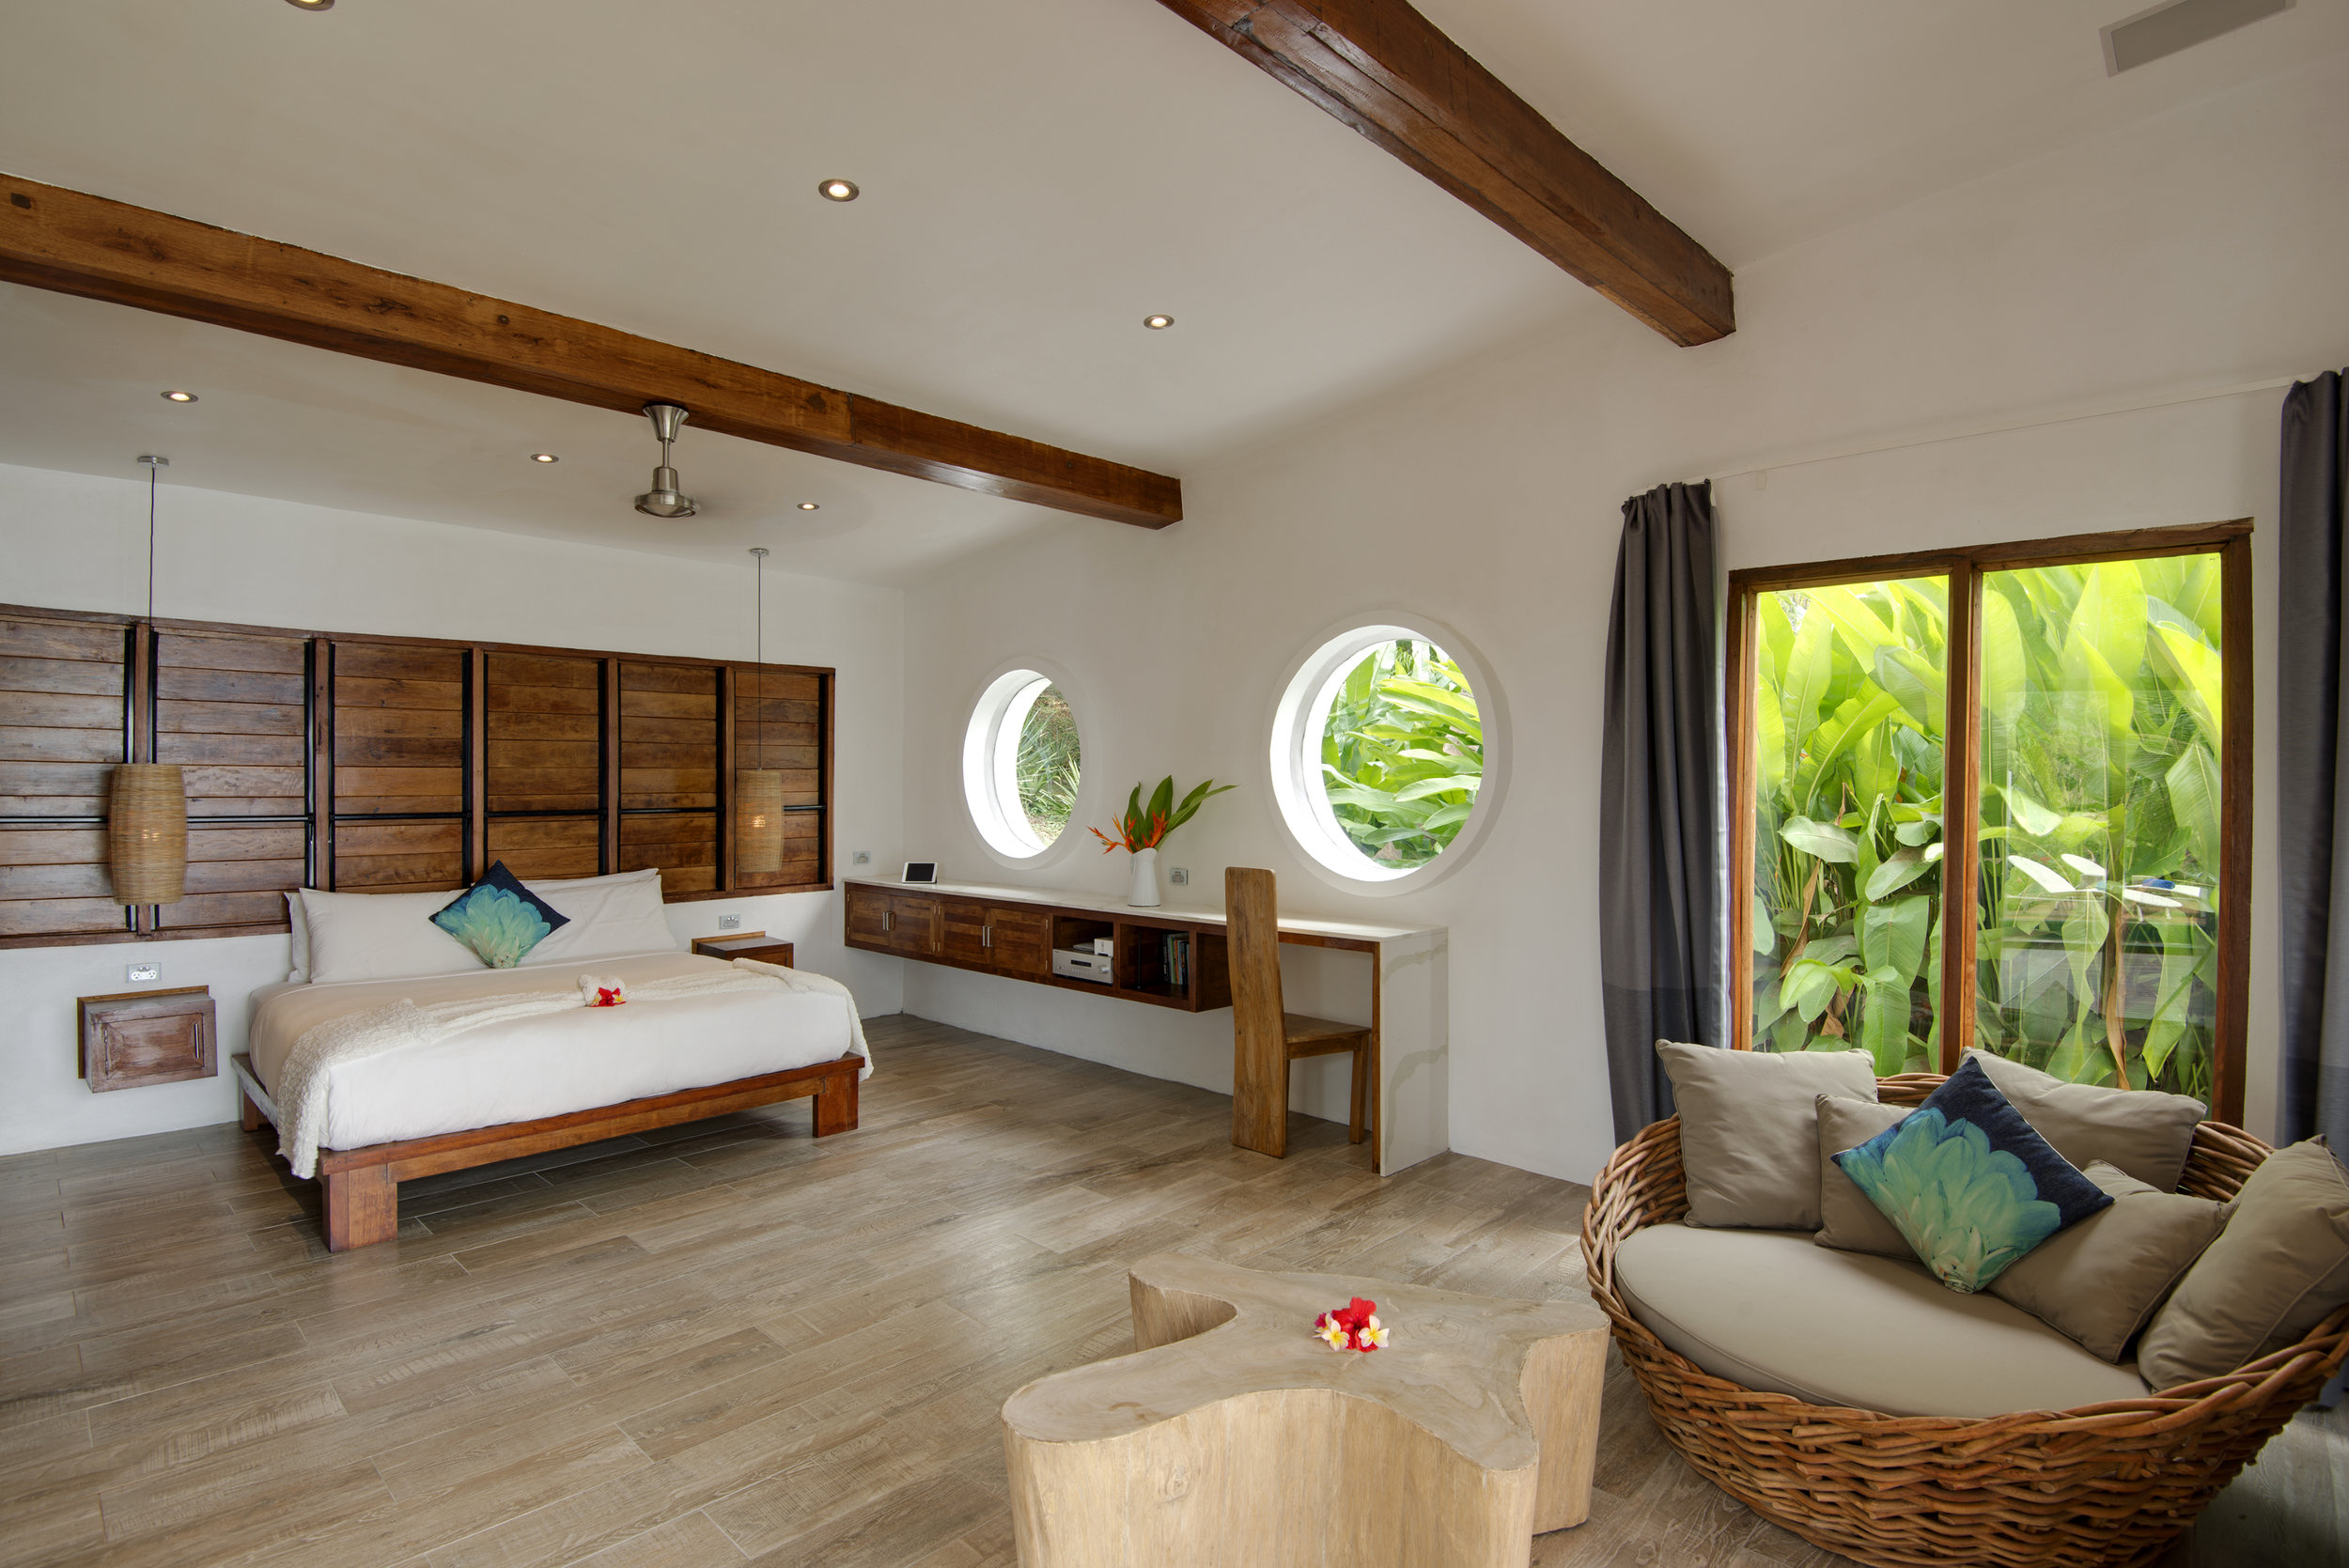 Royal Retreat - Luxury Fiji Accommodation, The Remote Resort Fiji Islands